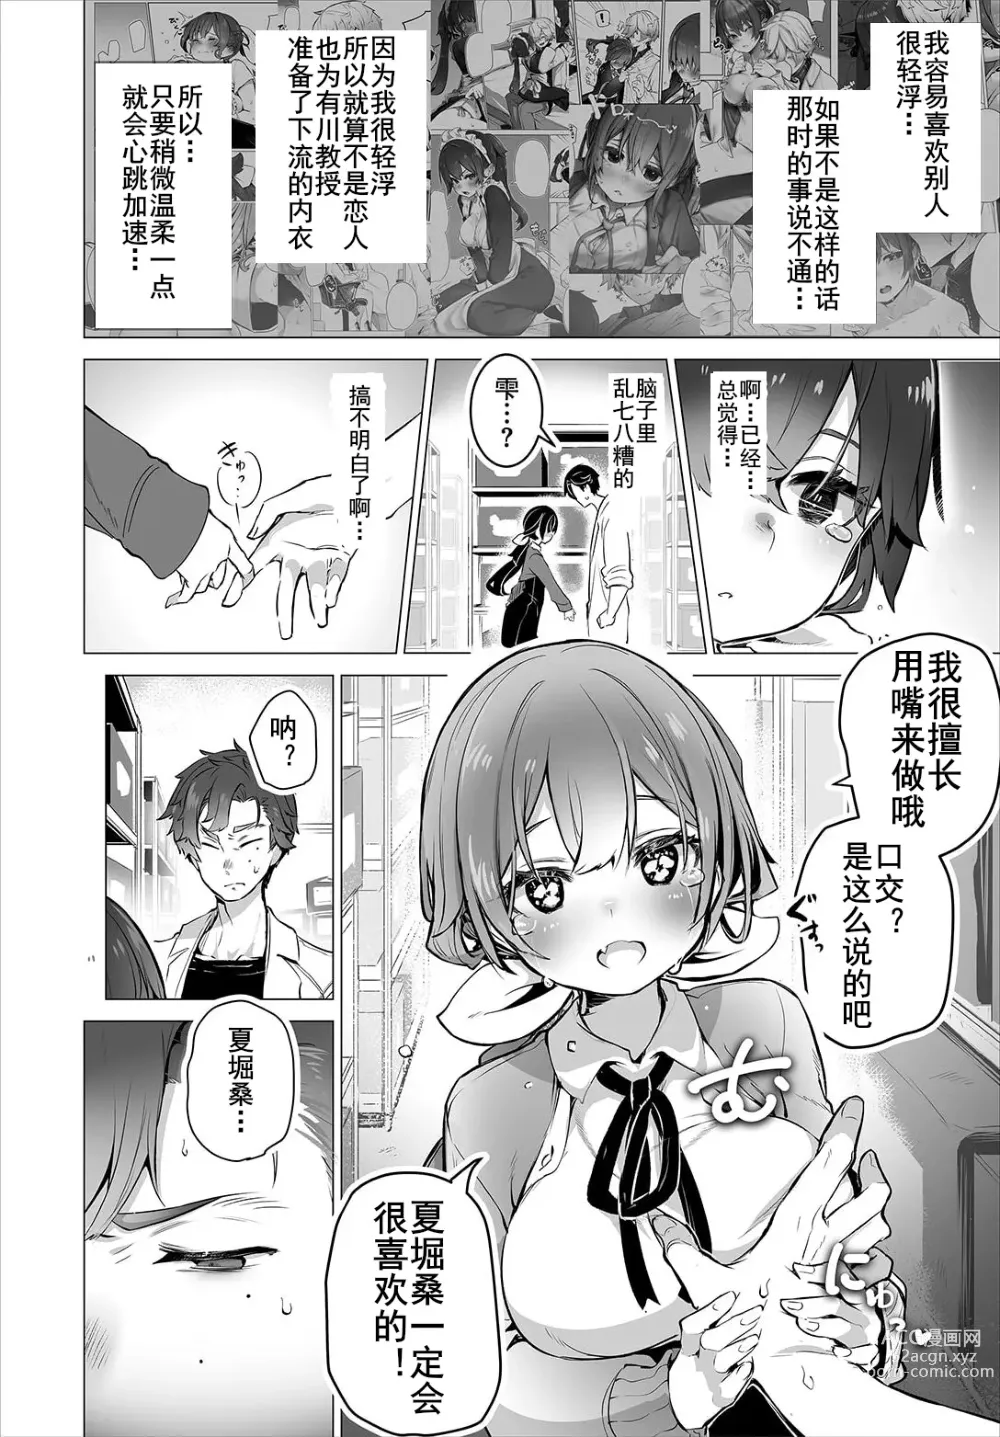 Page 8 of manga 东京黑匣子-抖S教授的疑案报告 11